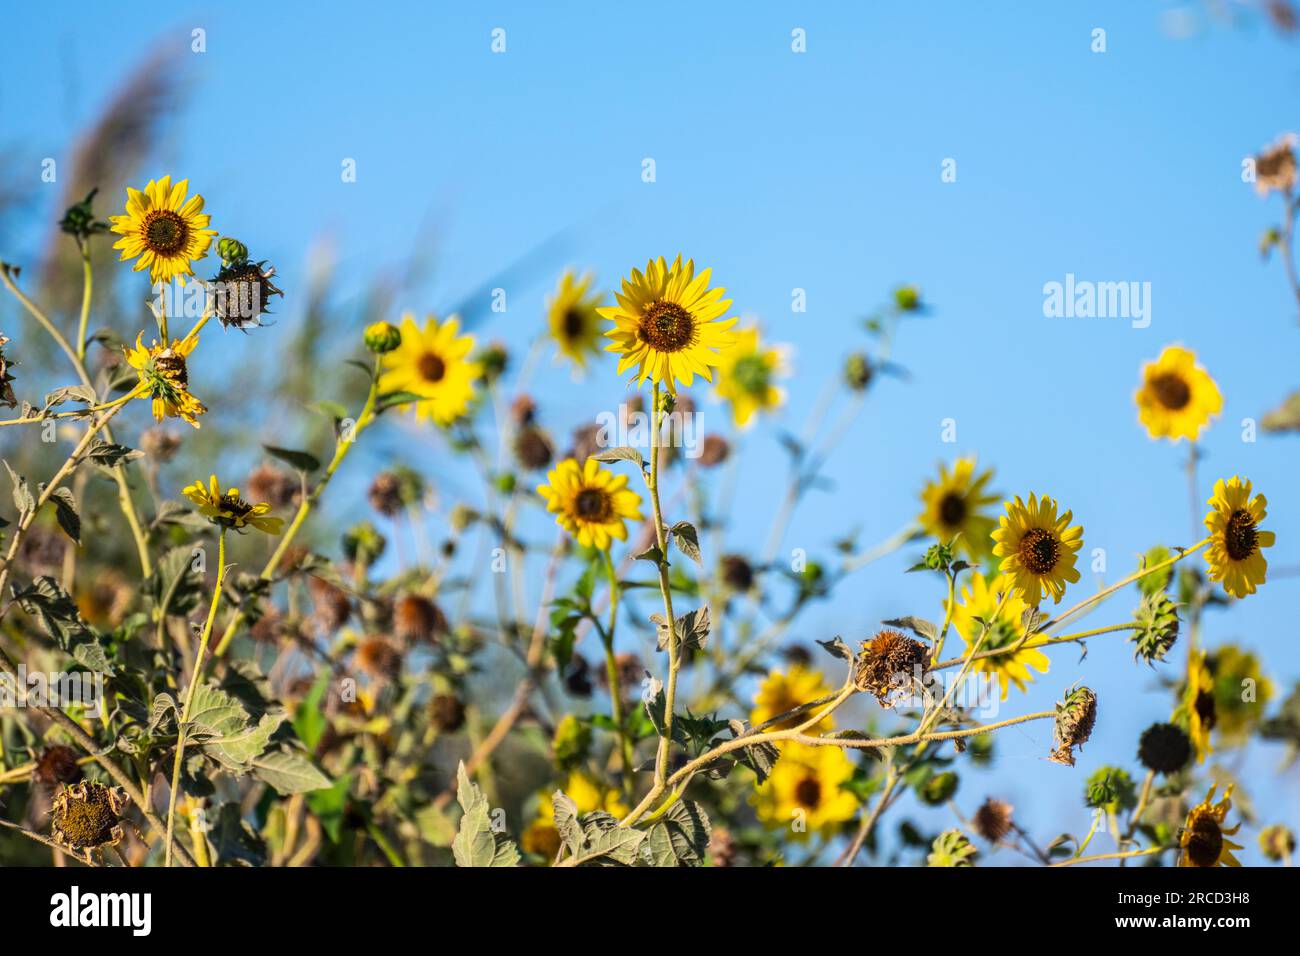 Osteospermum Yellow Daisy bush aka daisybushes or African daisies. with blue sky background Stock Photo